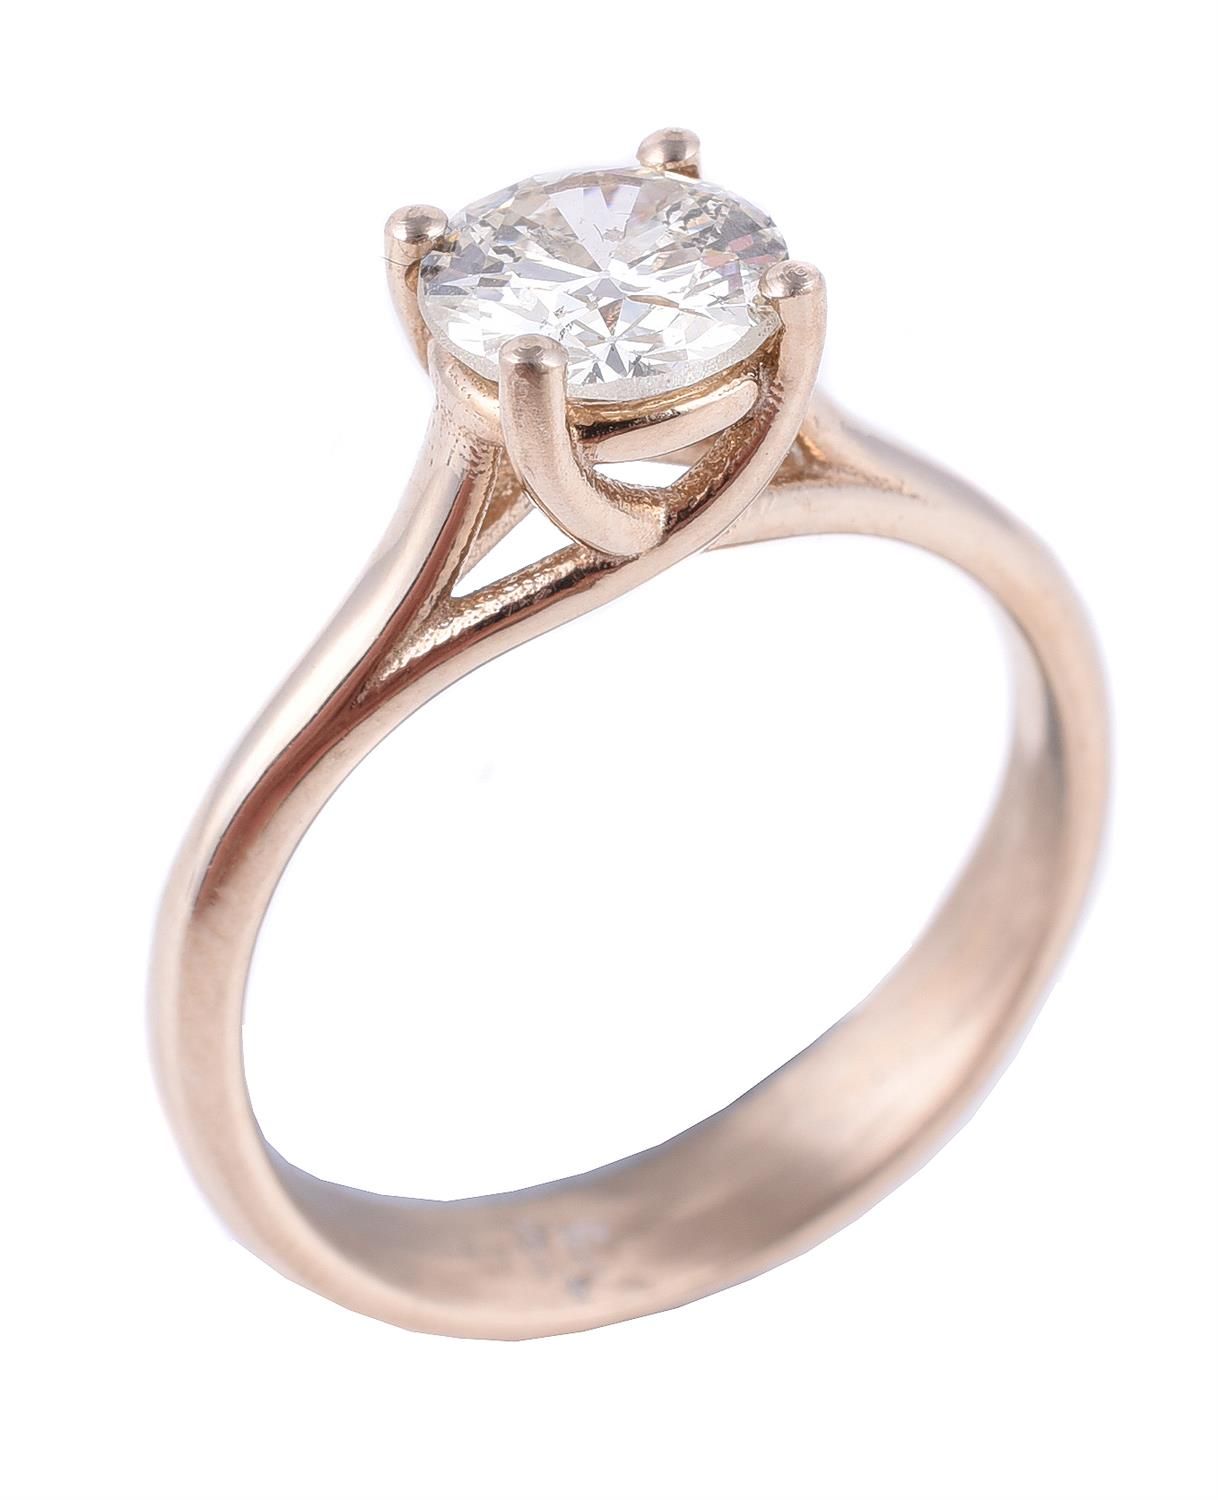 A diamond single stone ring 一枚钻石戒指，明亮式切割钻石估计重0.92克拉，四爪镶嵌，手指尺寸N 1/2，总重4.1克